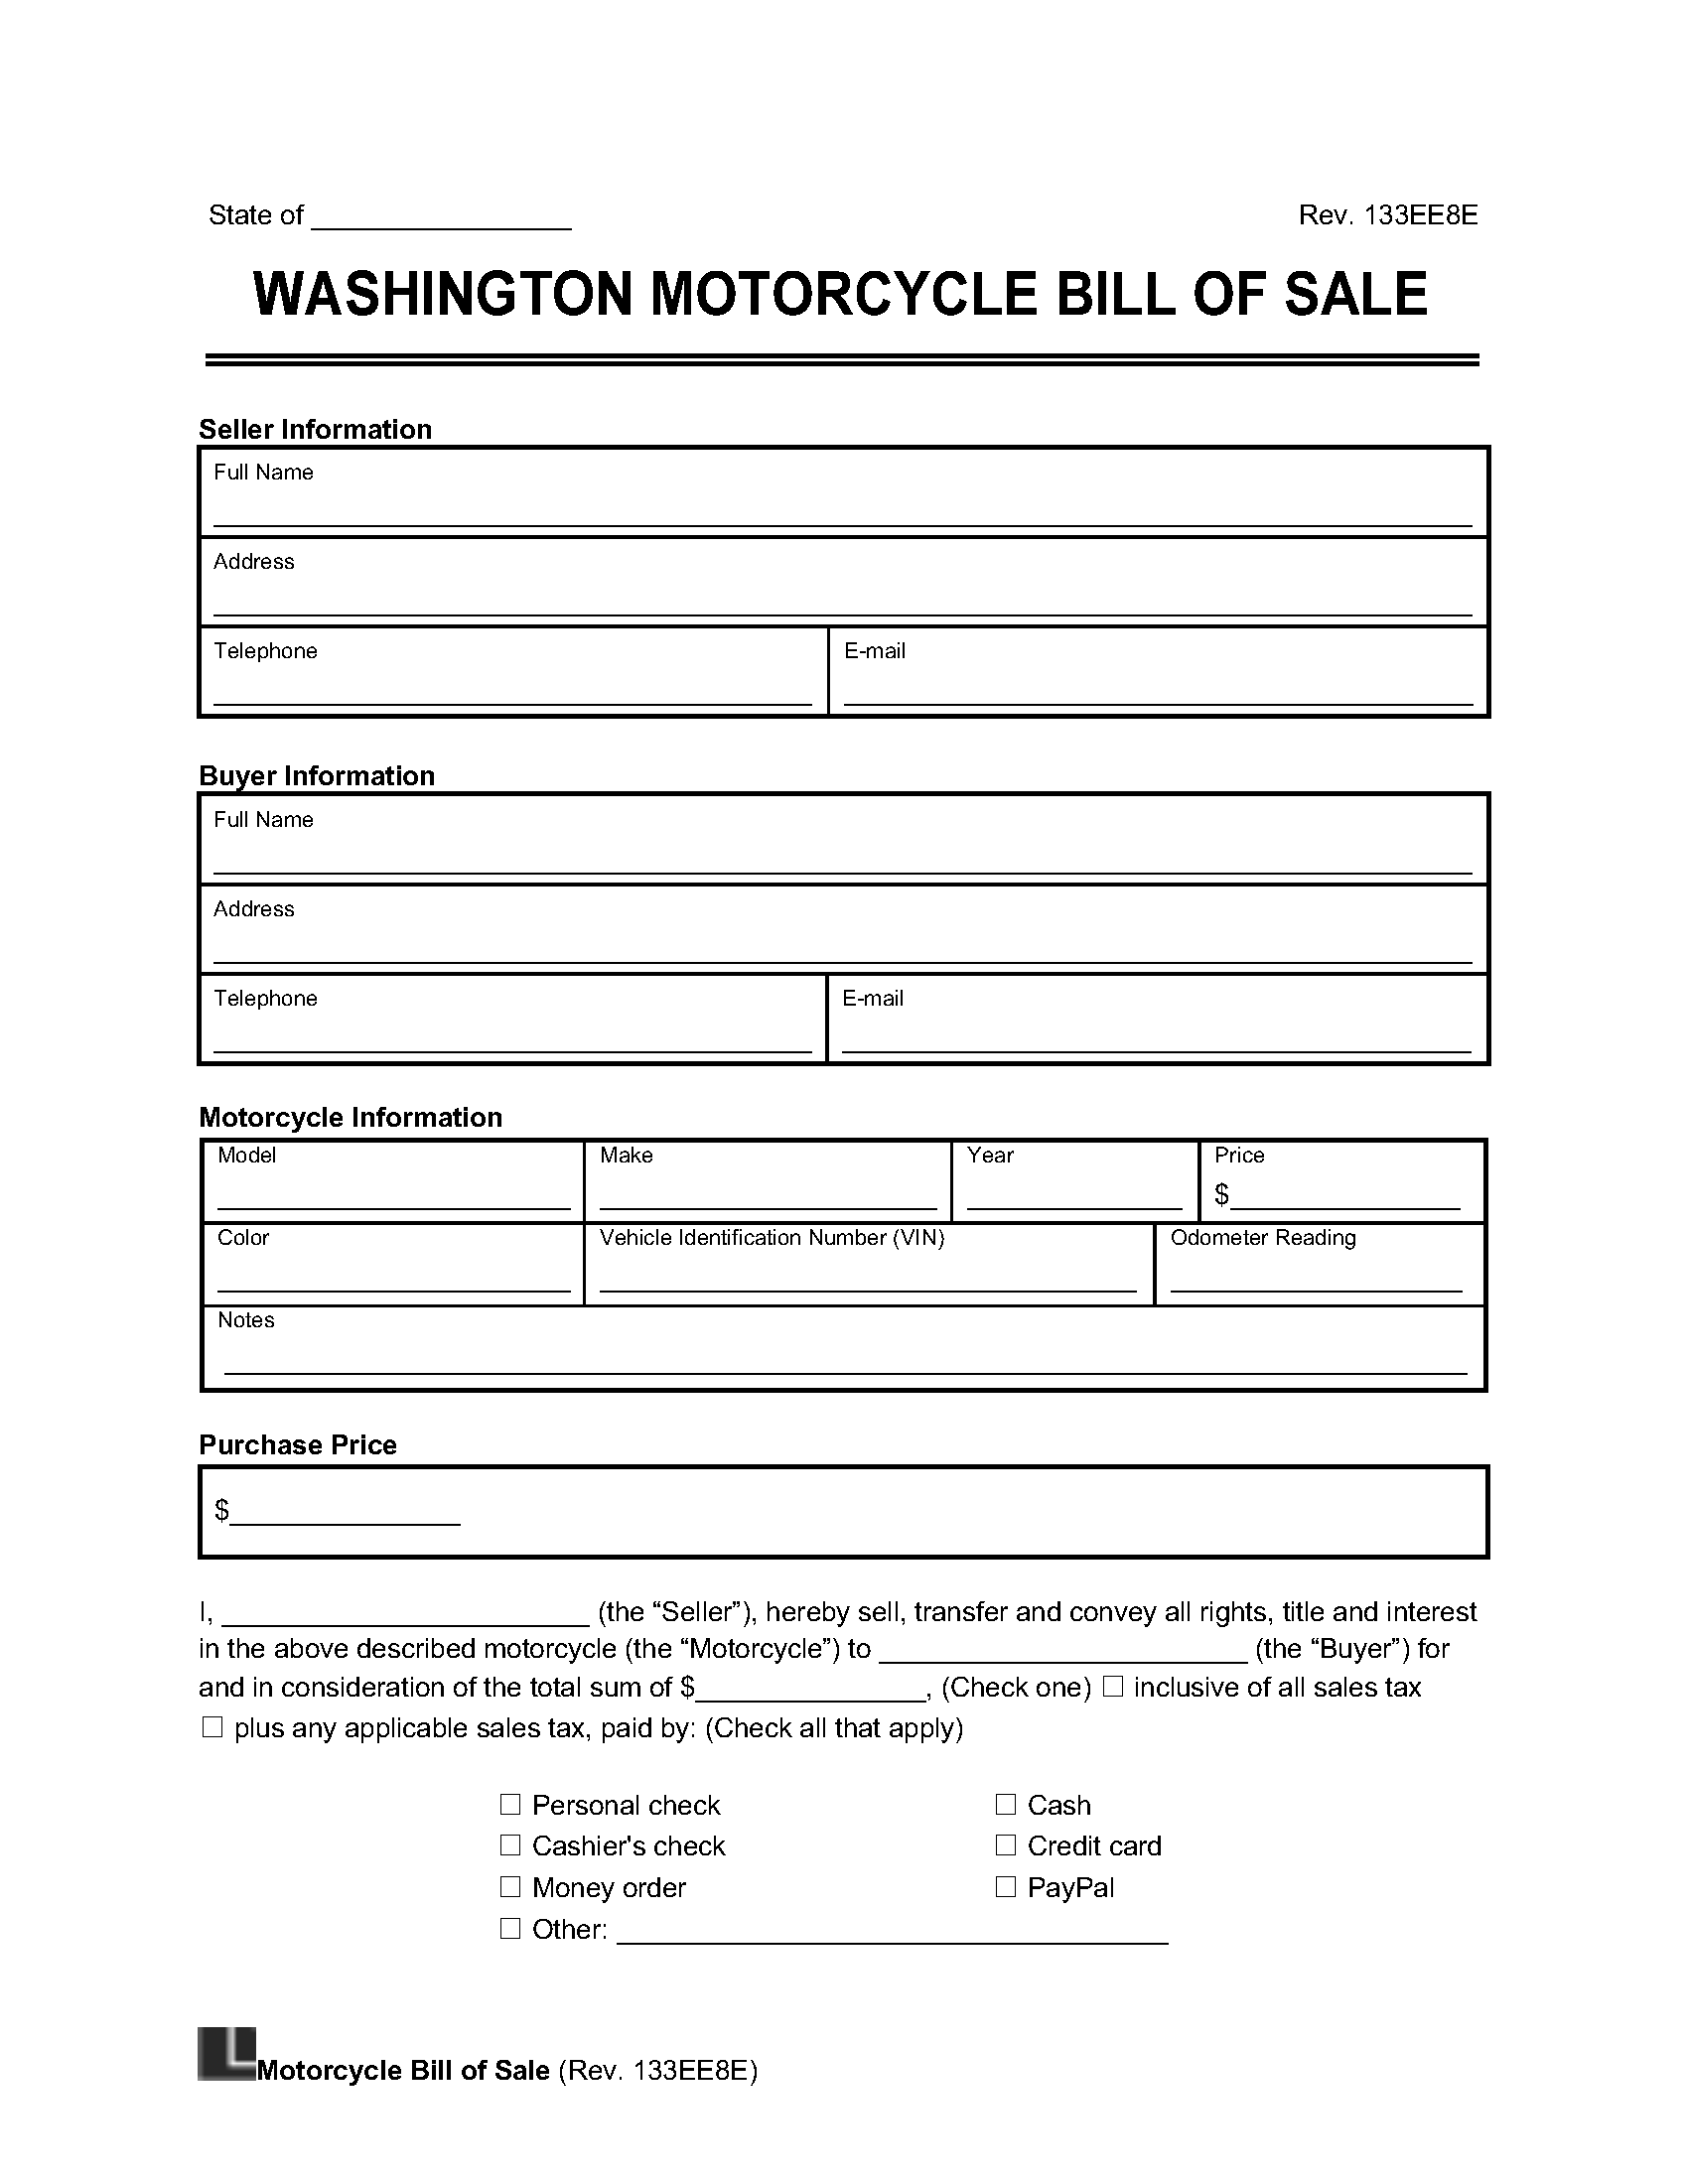 washington motorcycle bill of sale